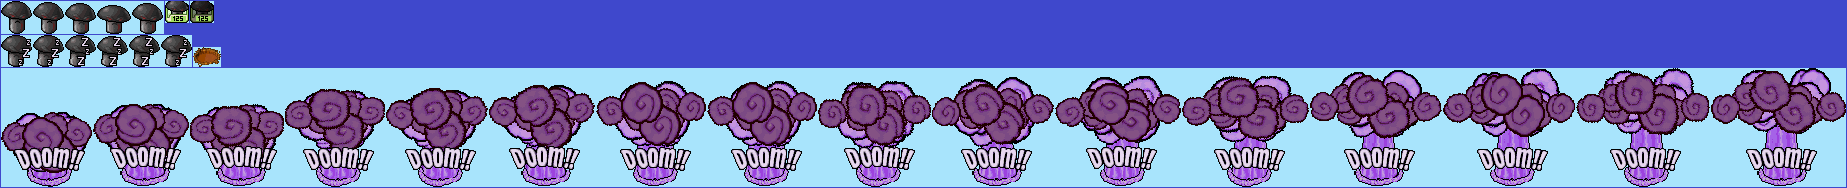 Doom-Shroom